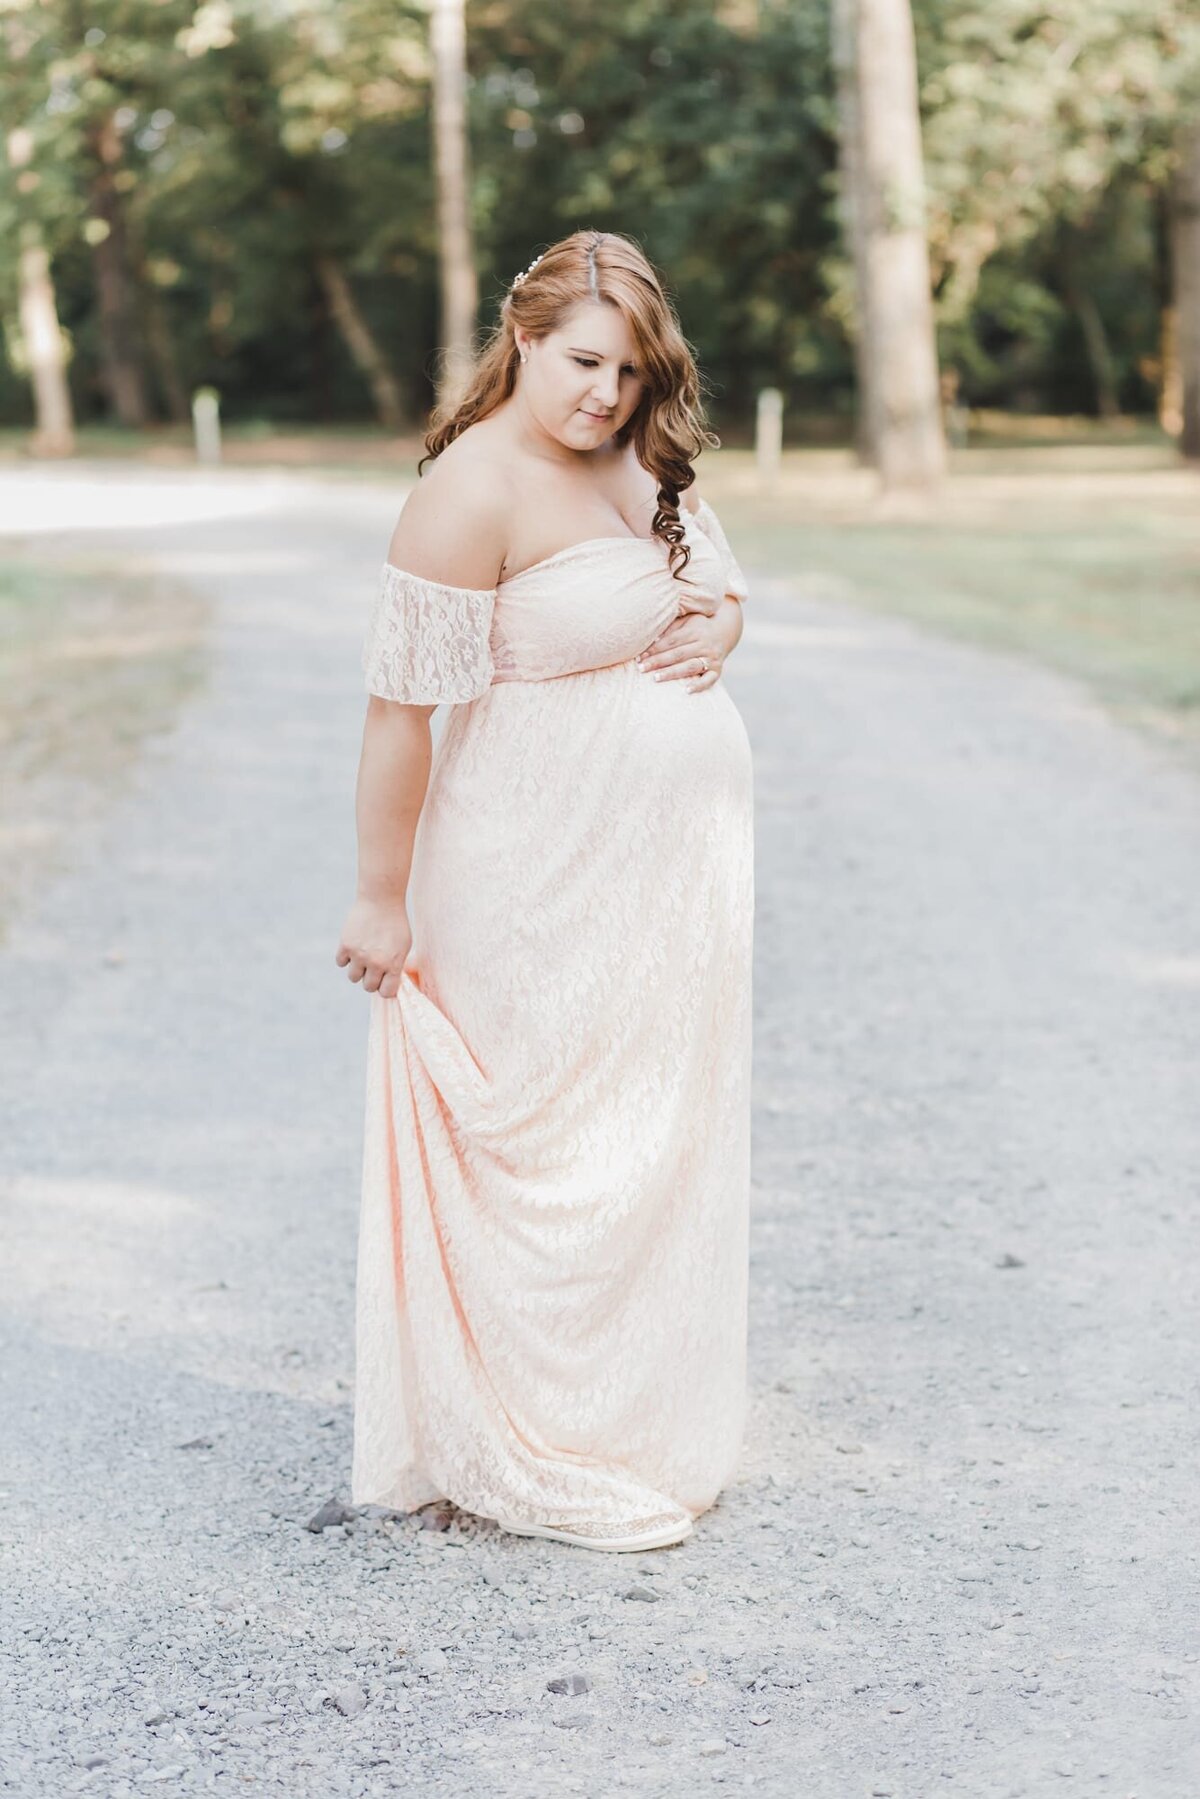 Jenn-Northern-Virginia-Maternity-22